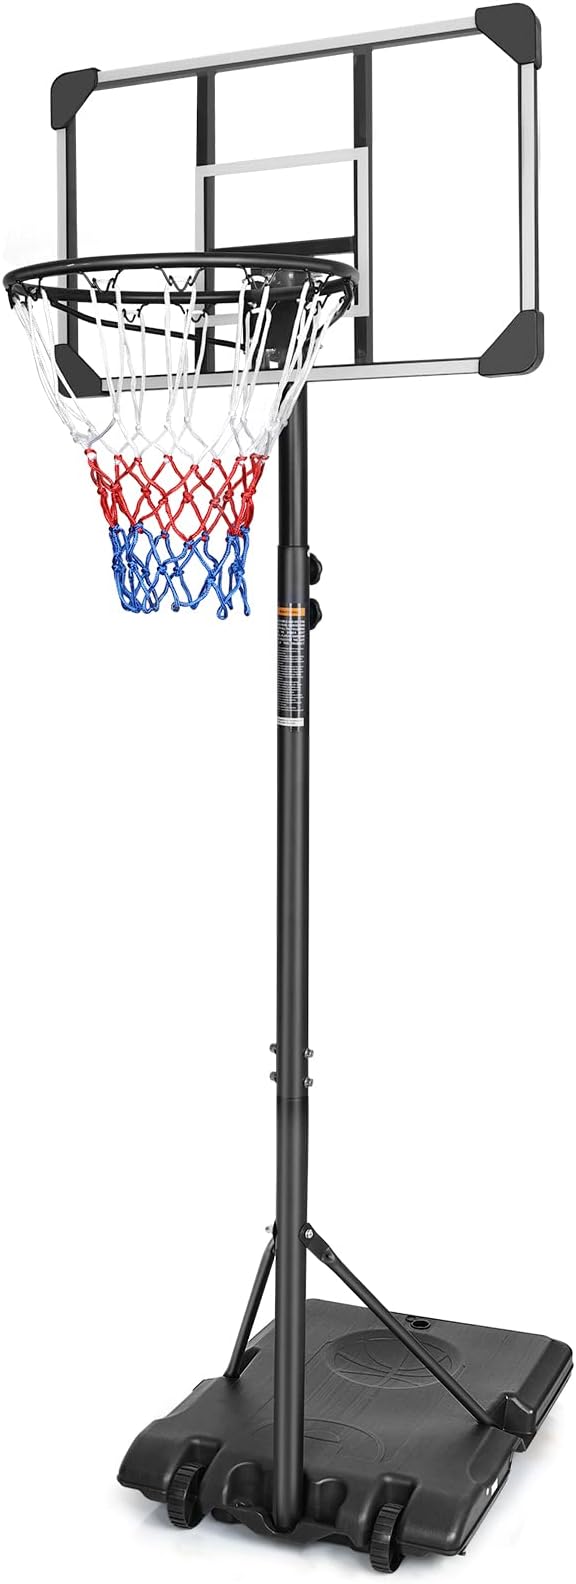 Kuikui Portable Basketball Goal System Stable Baseandwheels Indoor/Outdoor Height 5 6 To 7ft Youth/Teenagers 28backboard